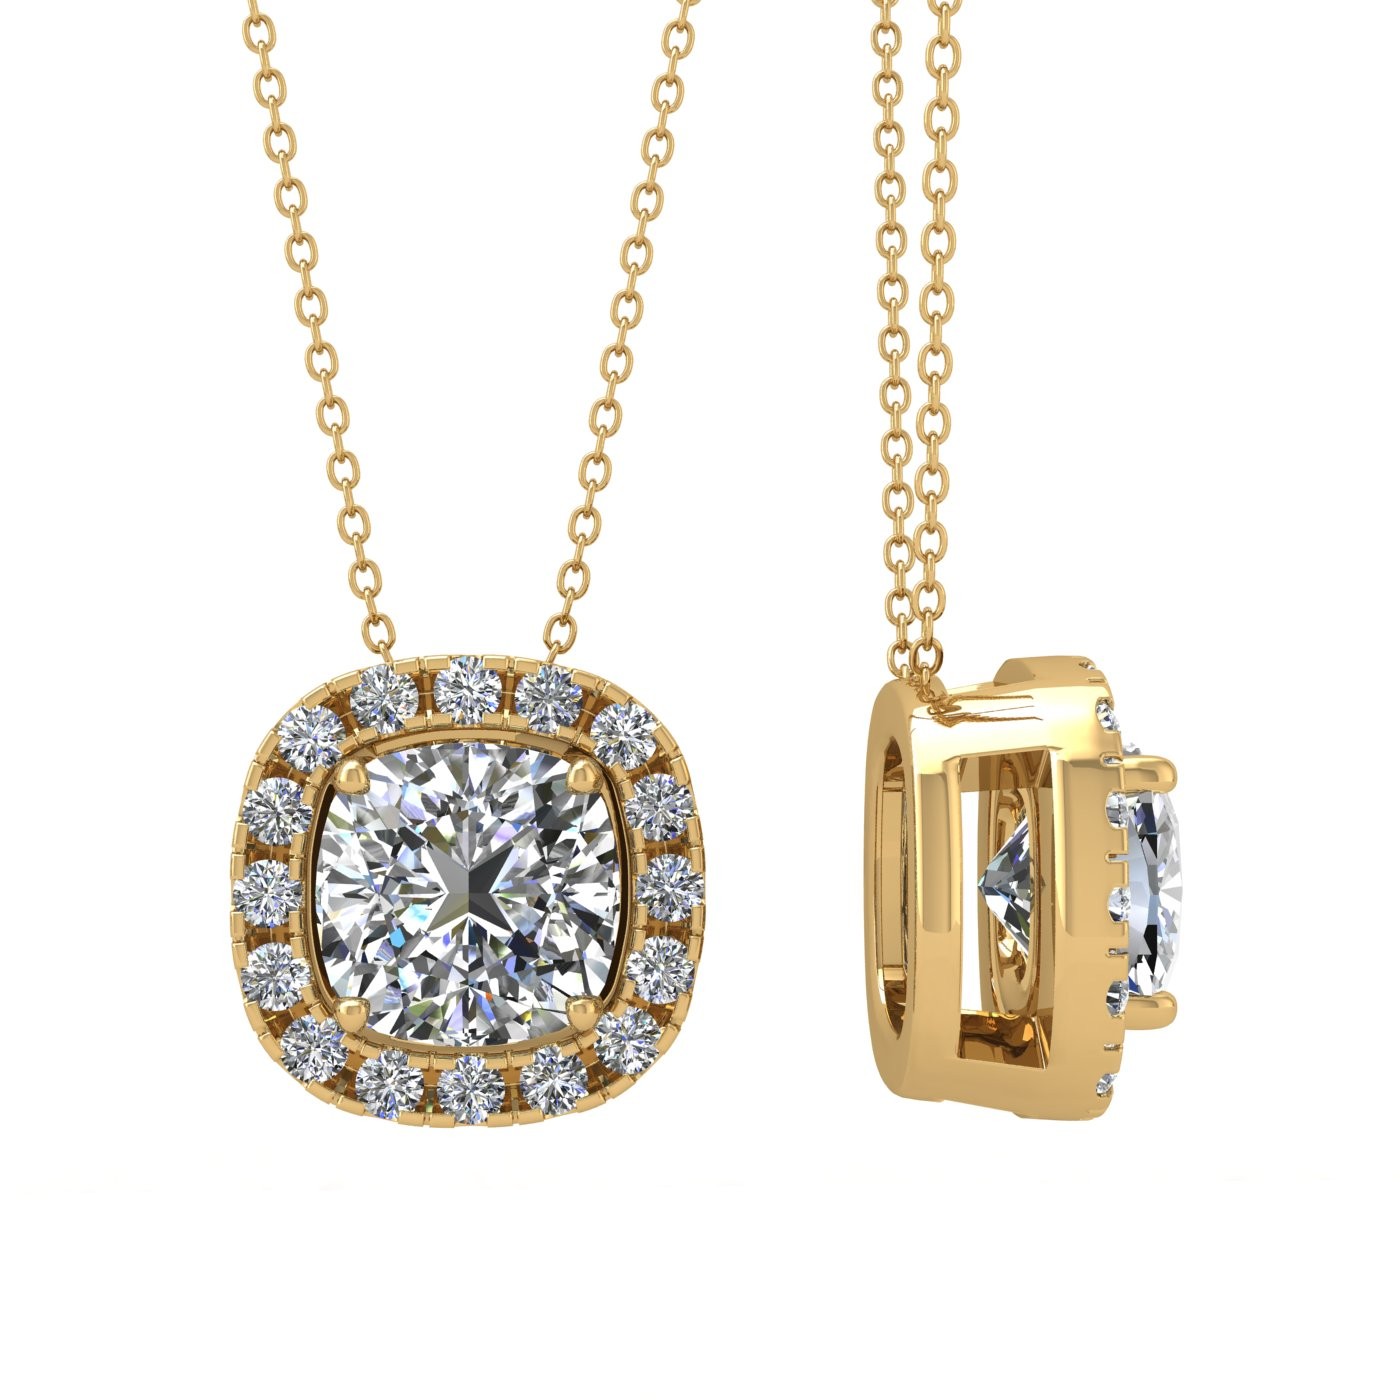 18k white gold  2 ct 4 prongs cushion shape diamond pendant with diamond pavÉ set halo Photos & images